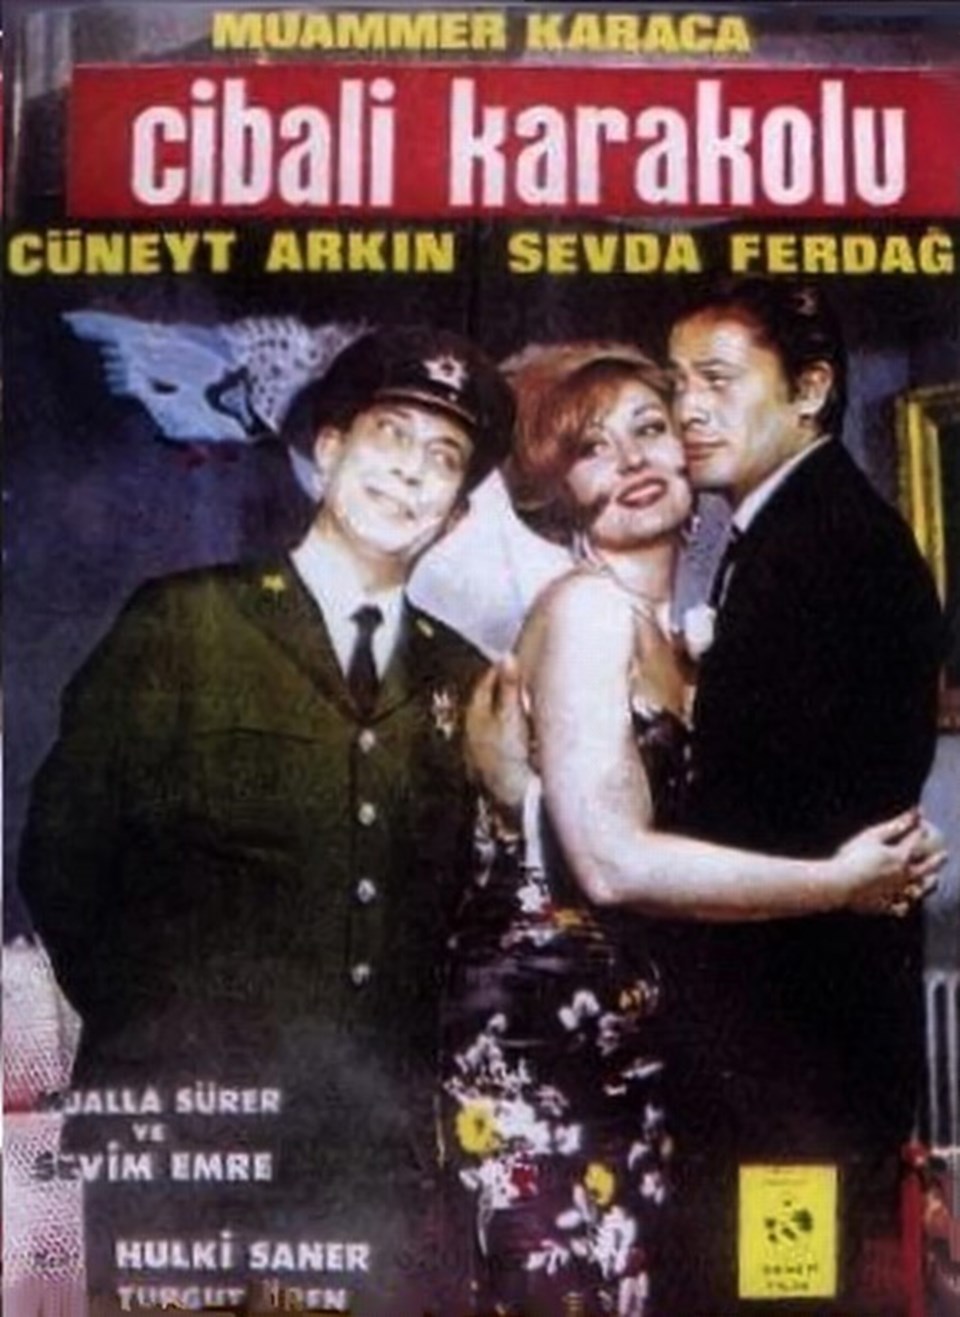 'Cibali Karakolu' 1966'da sinemaya aktarÄ±lmÄ±ÅtÄ±. BaÅrollerde CÃ¼neyt ArkÄ±n, Sevda FerdaÄ ve Muammer Karaca vardÄ±.